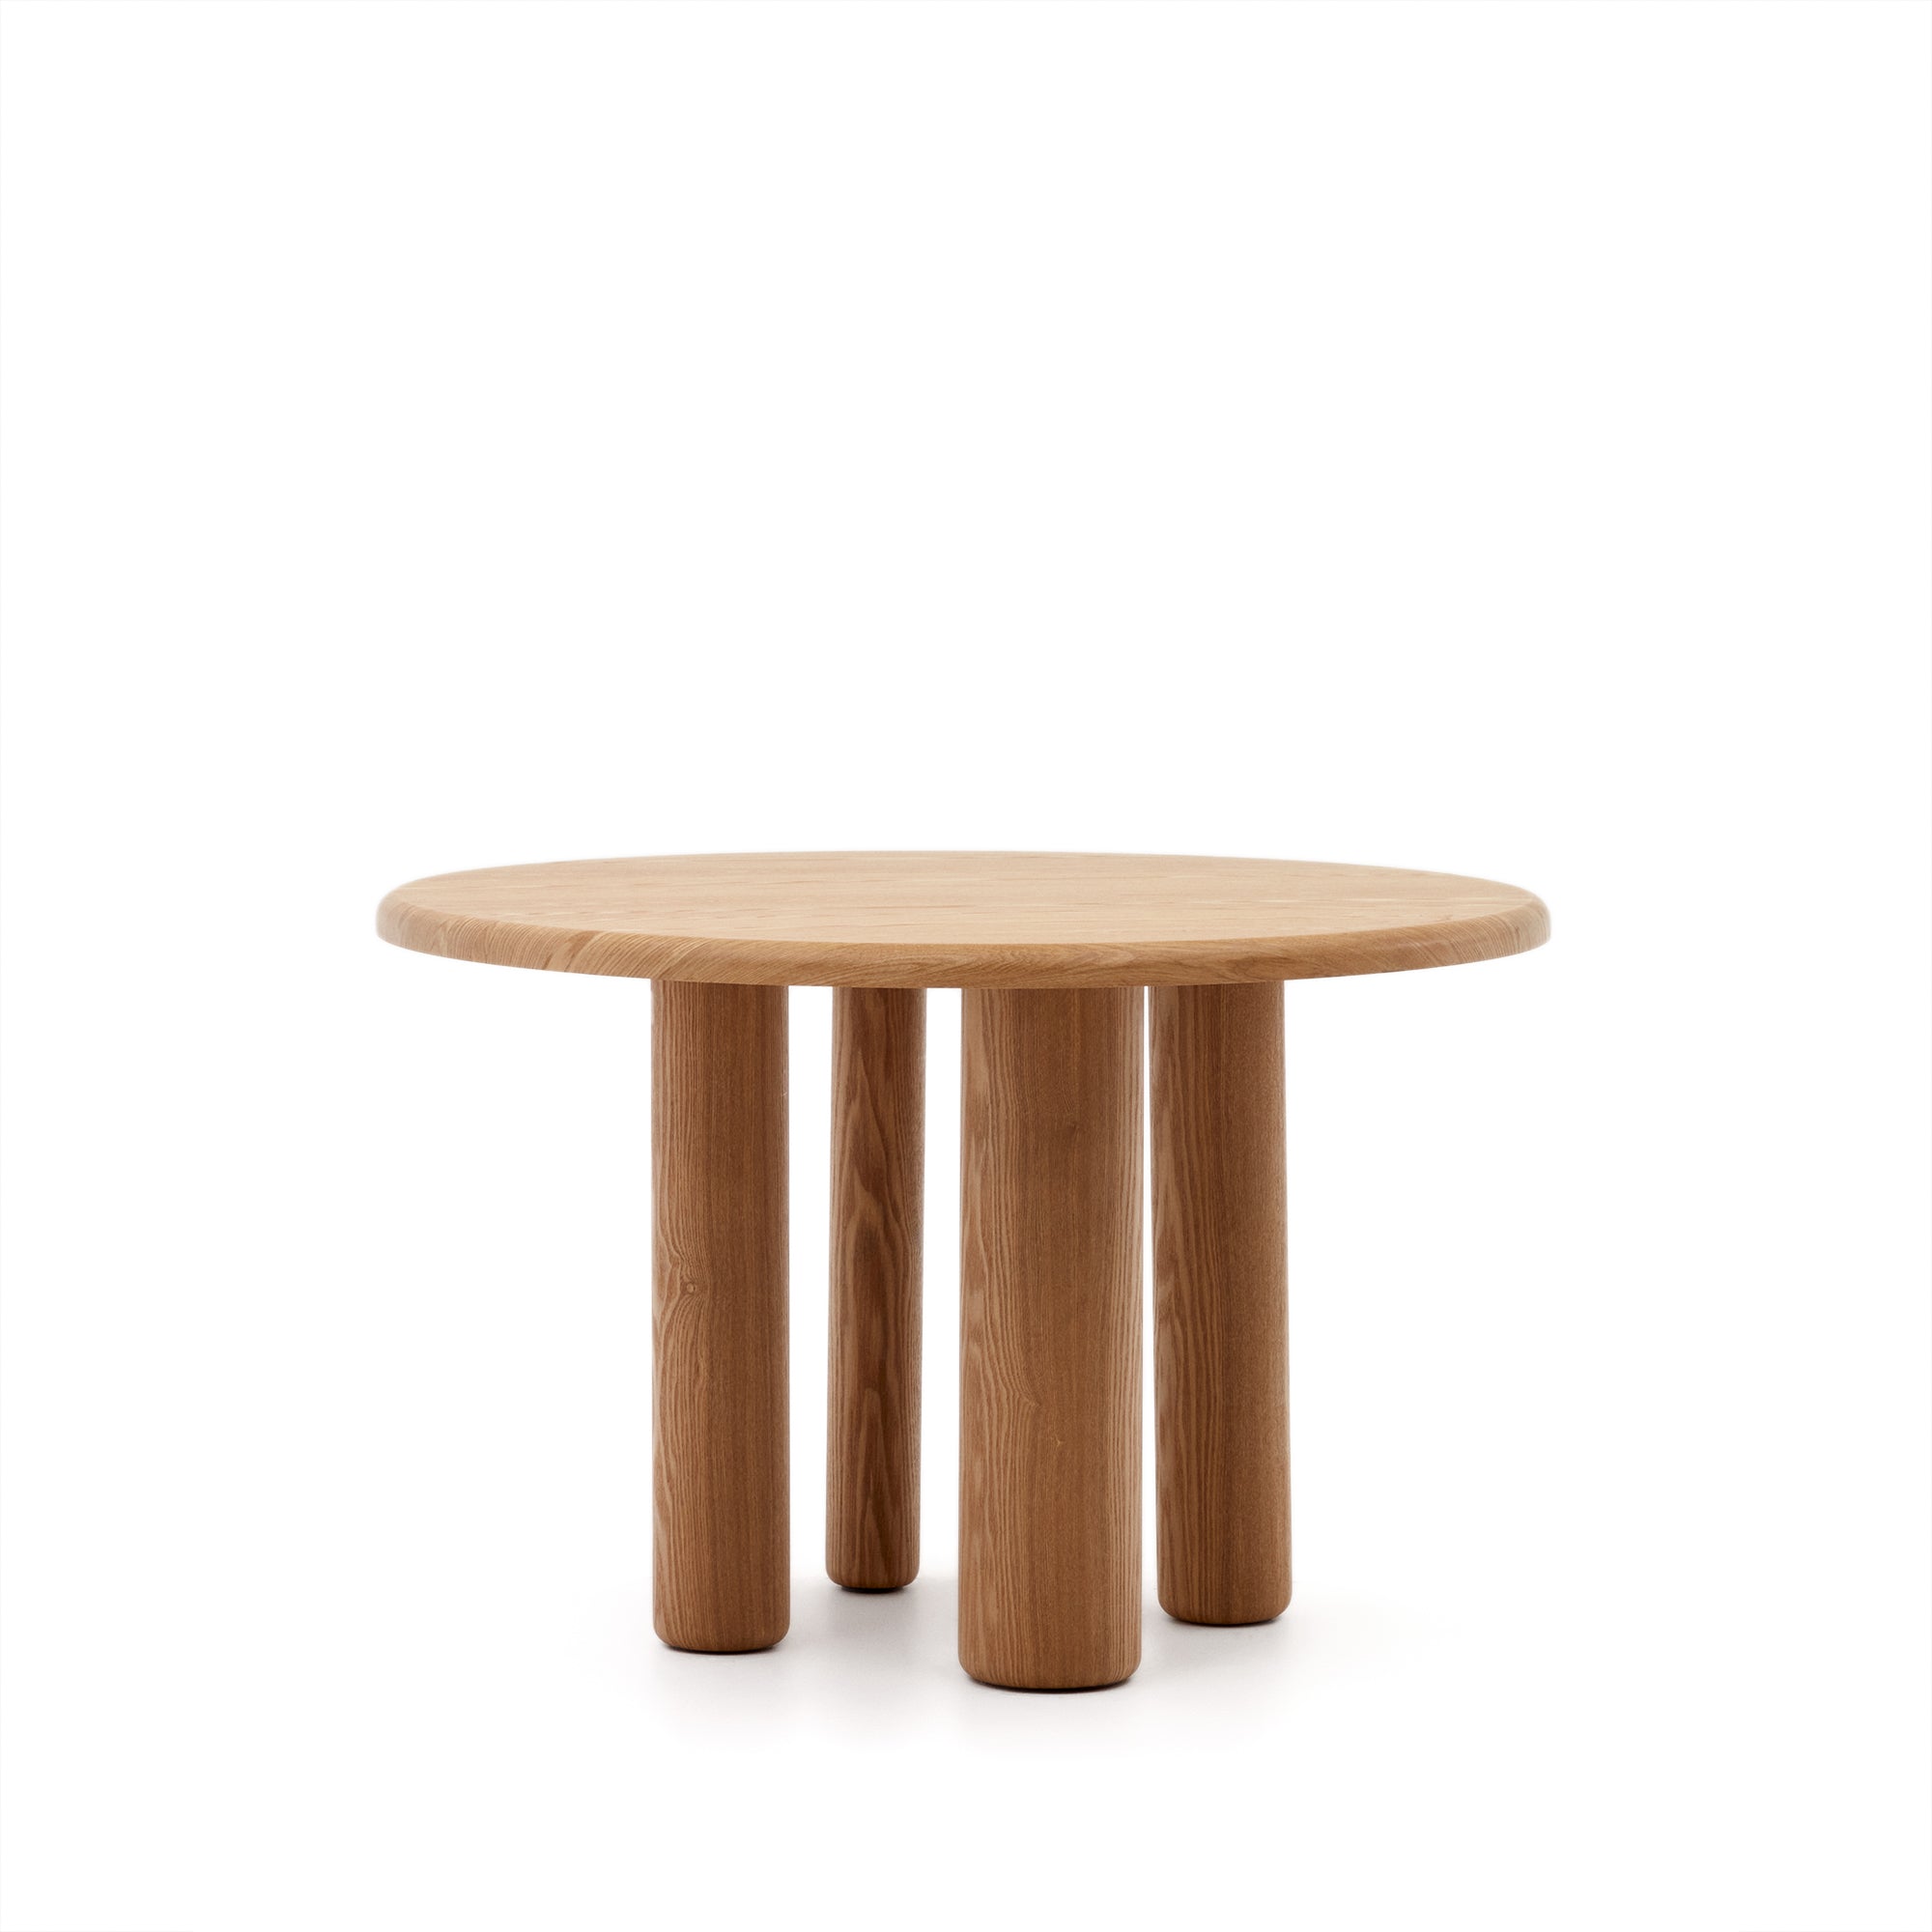 Mailen kerek asztal kőrisfa furnérból, natúr kivitelben, Ø 120 cm